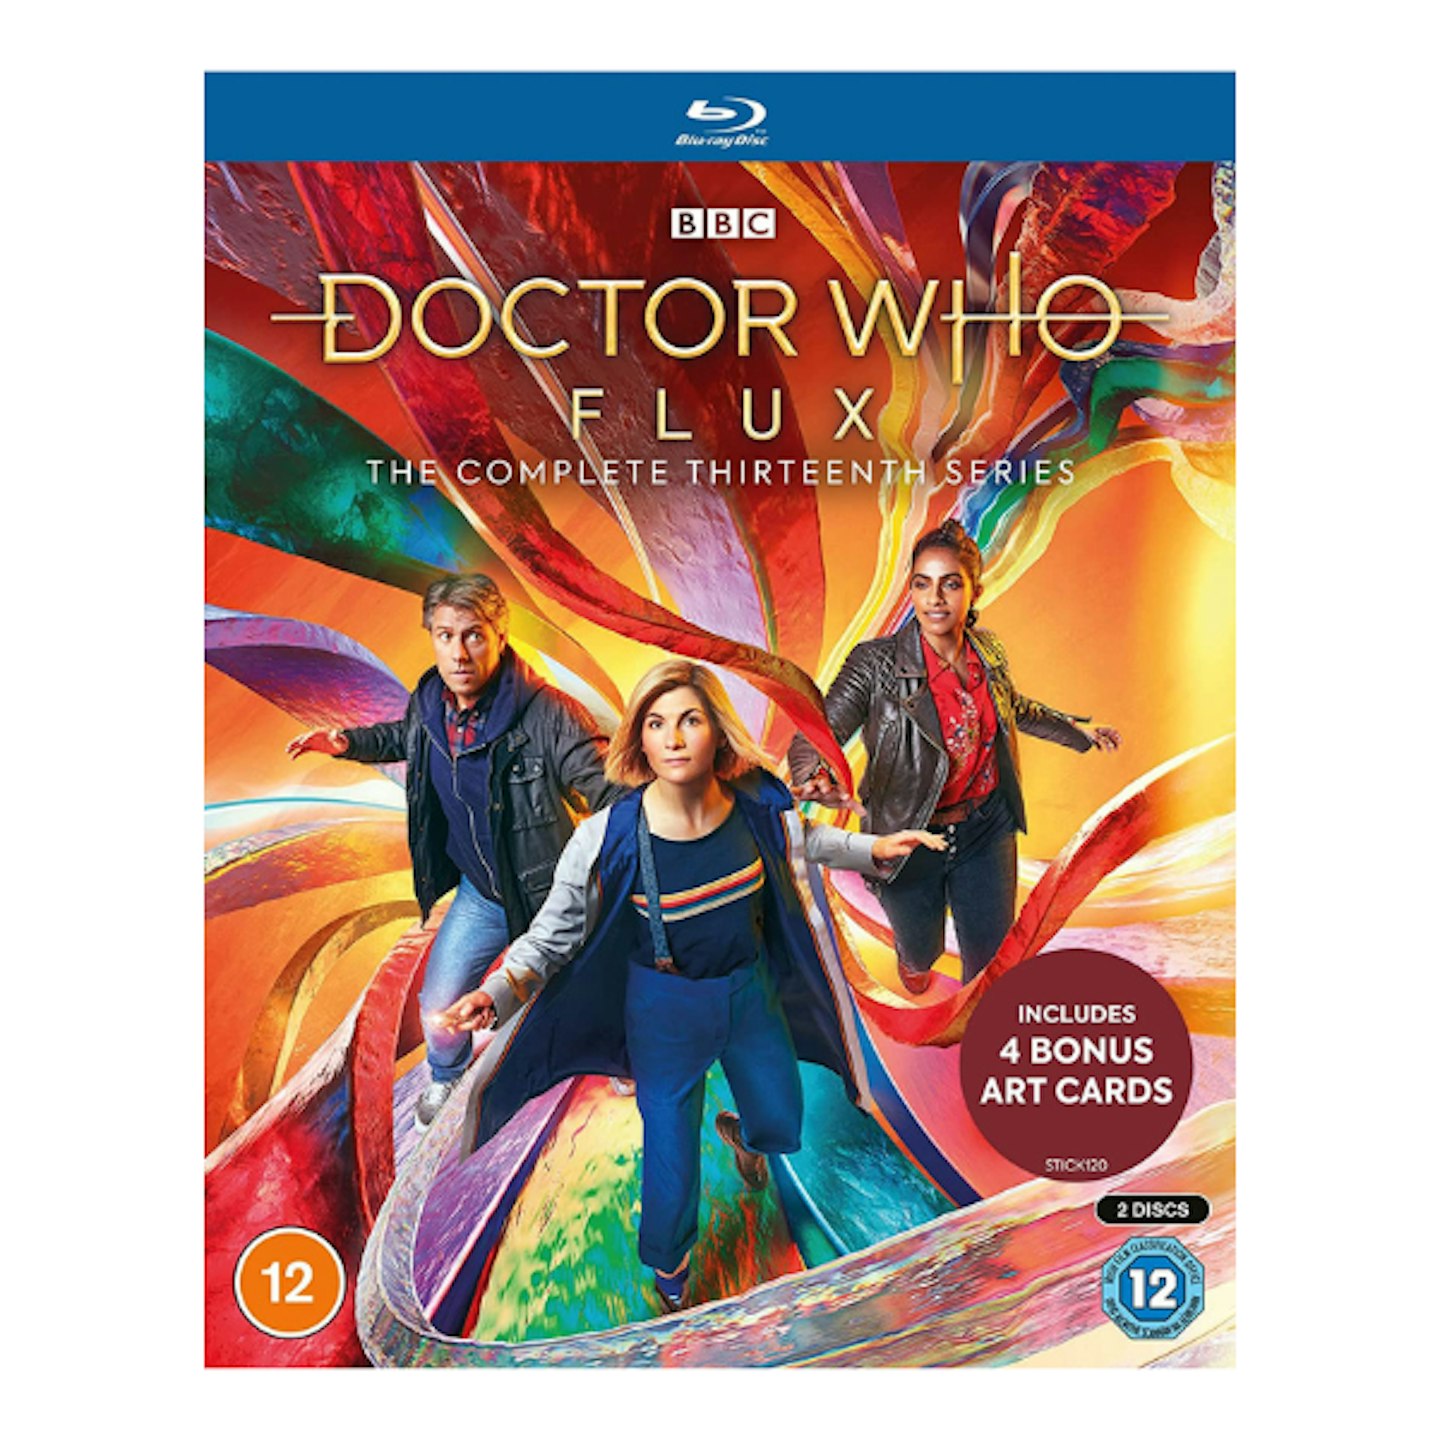 Doctor Who Series 13 Blu-ray